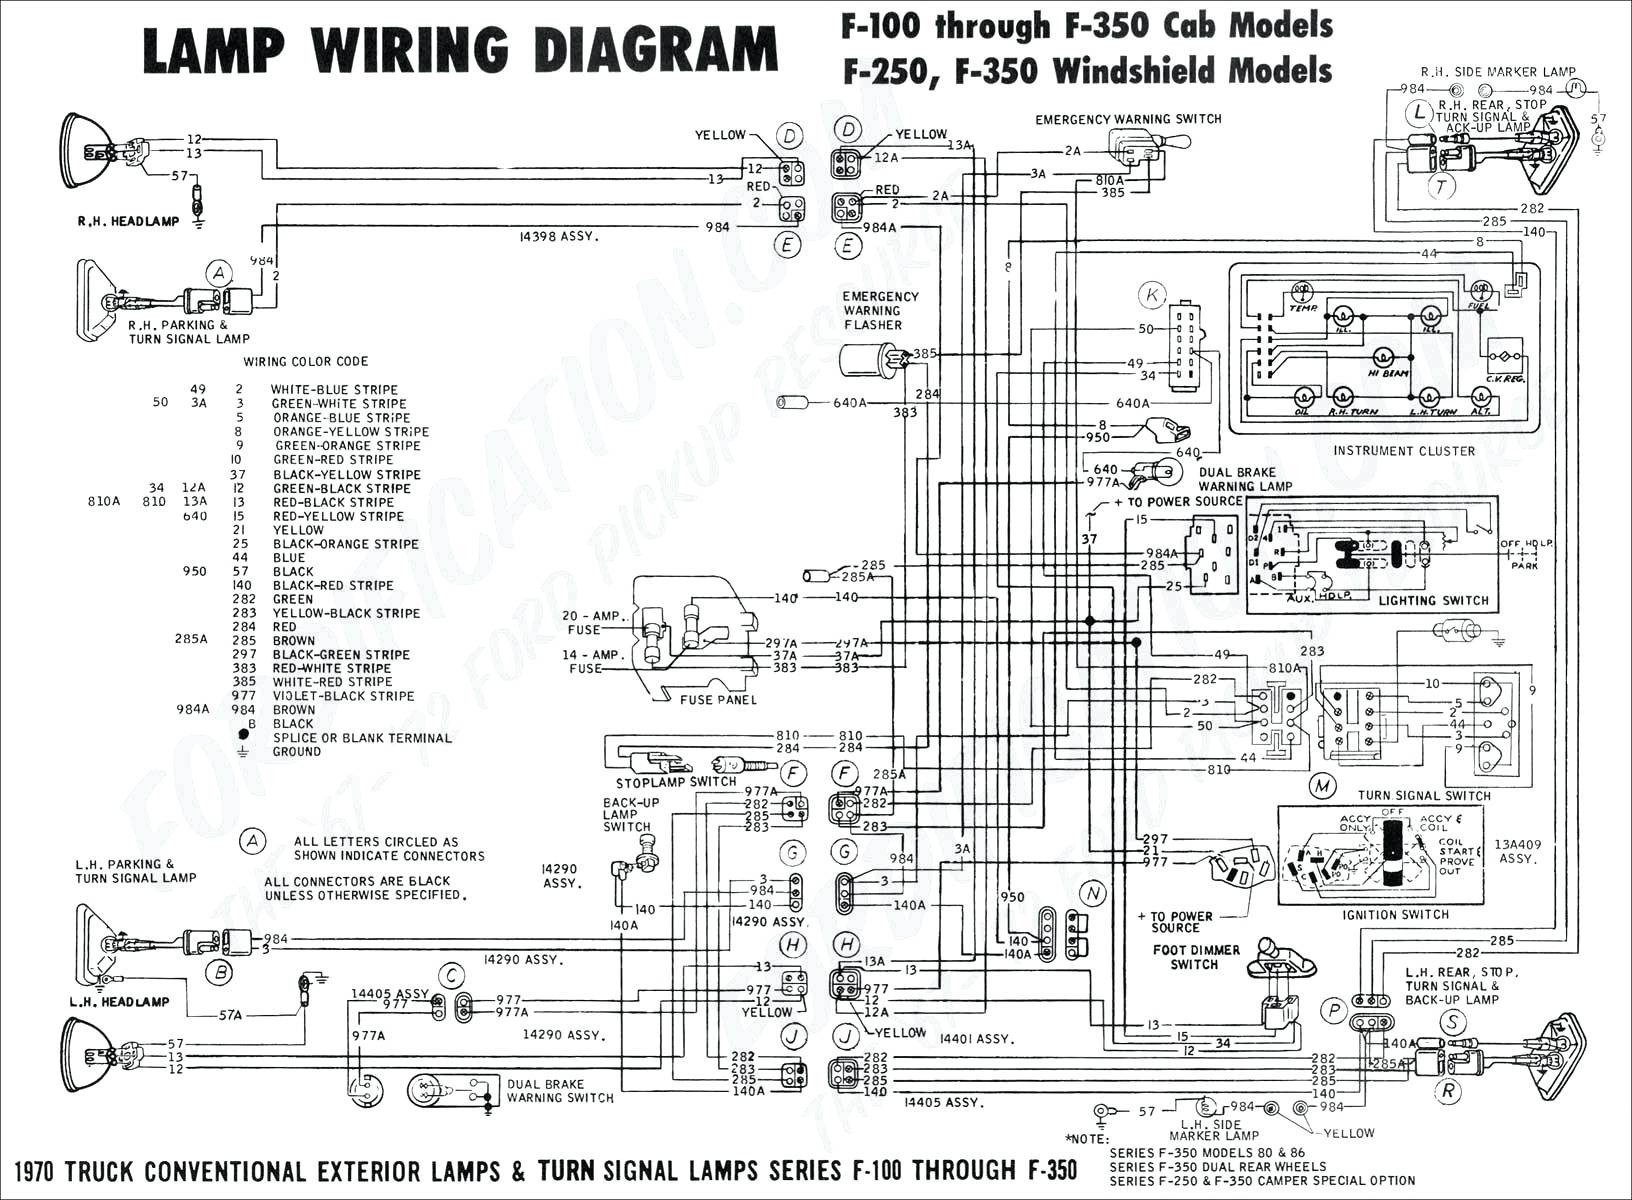 Square D Load Center Wiring Diagram Lexus E300 1995 Wiring Diagram Wiring Diagram toolbox Of Square D Load Center Wiring Diagram